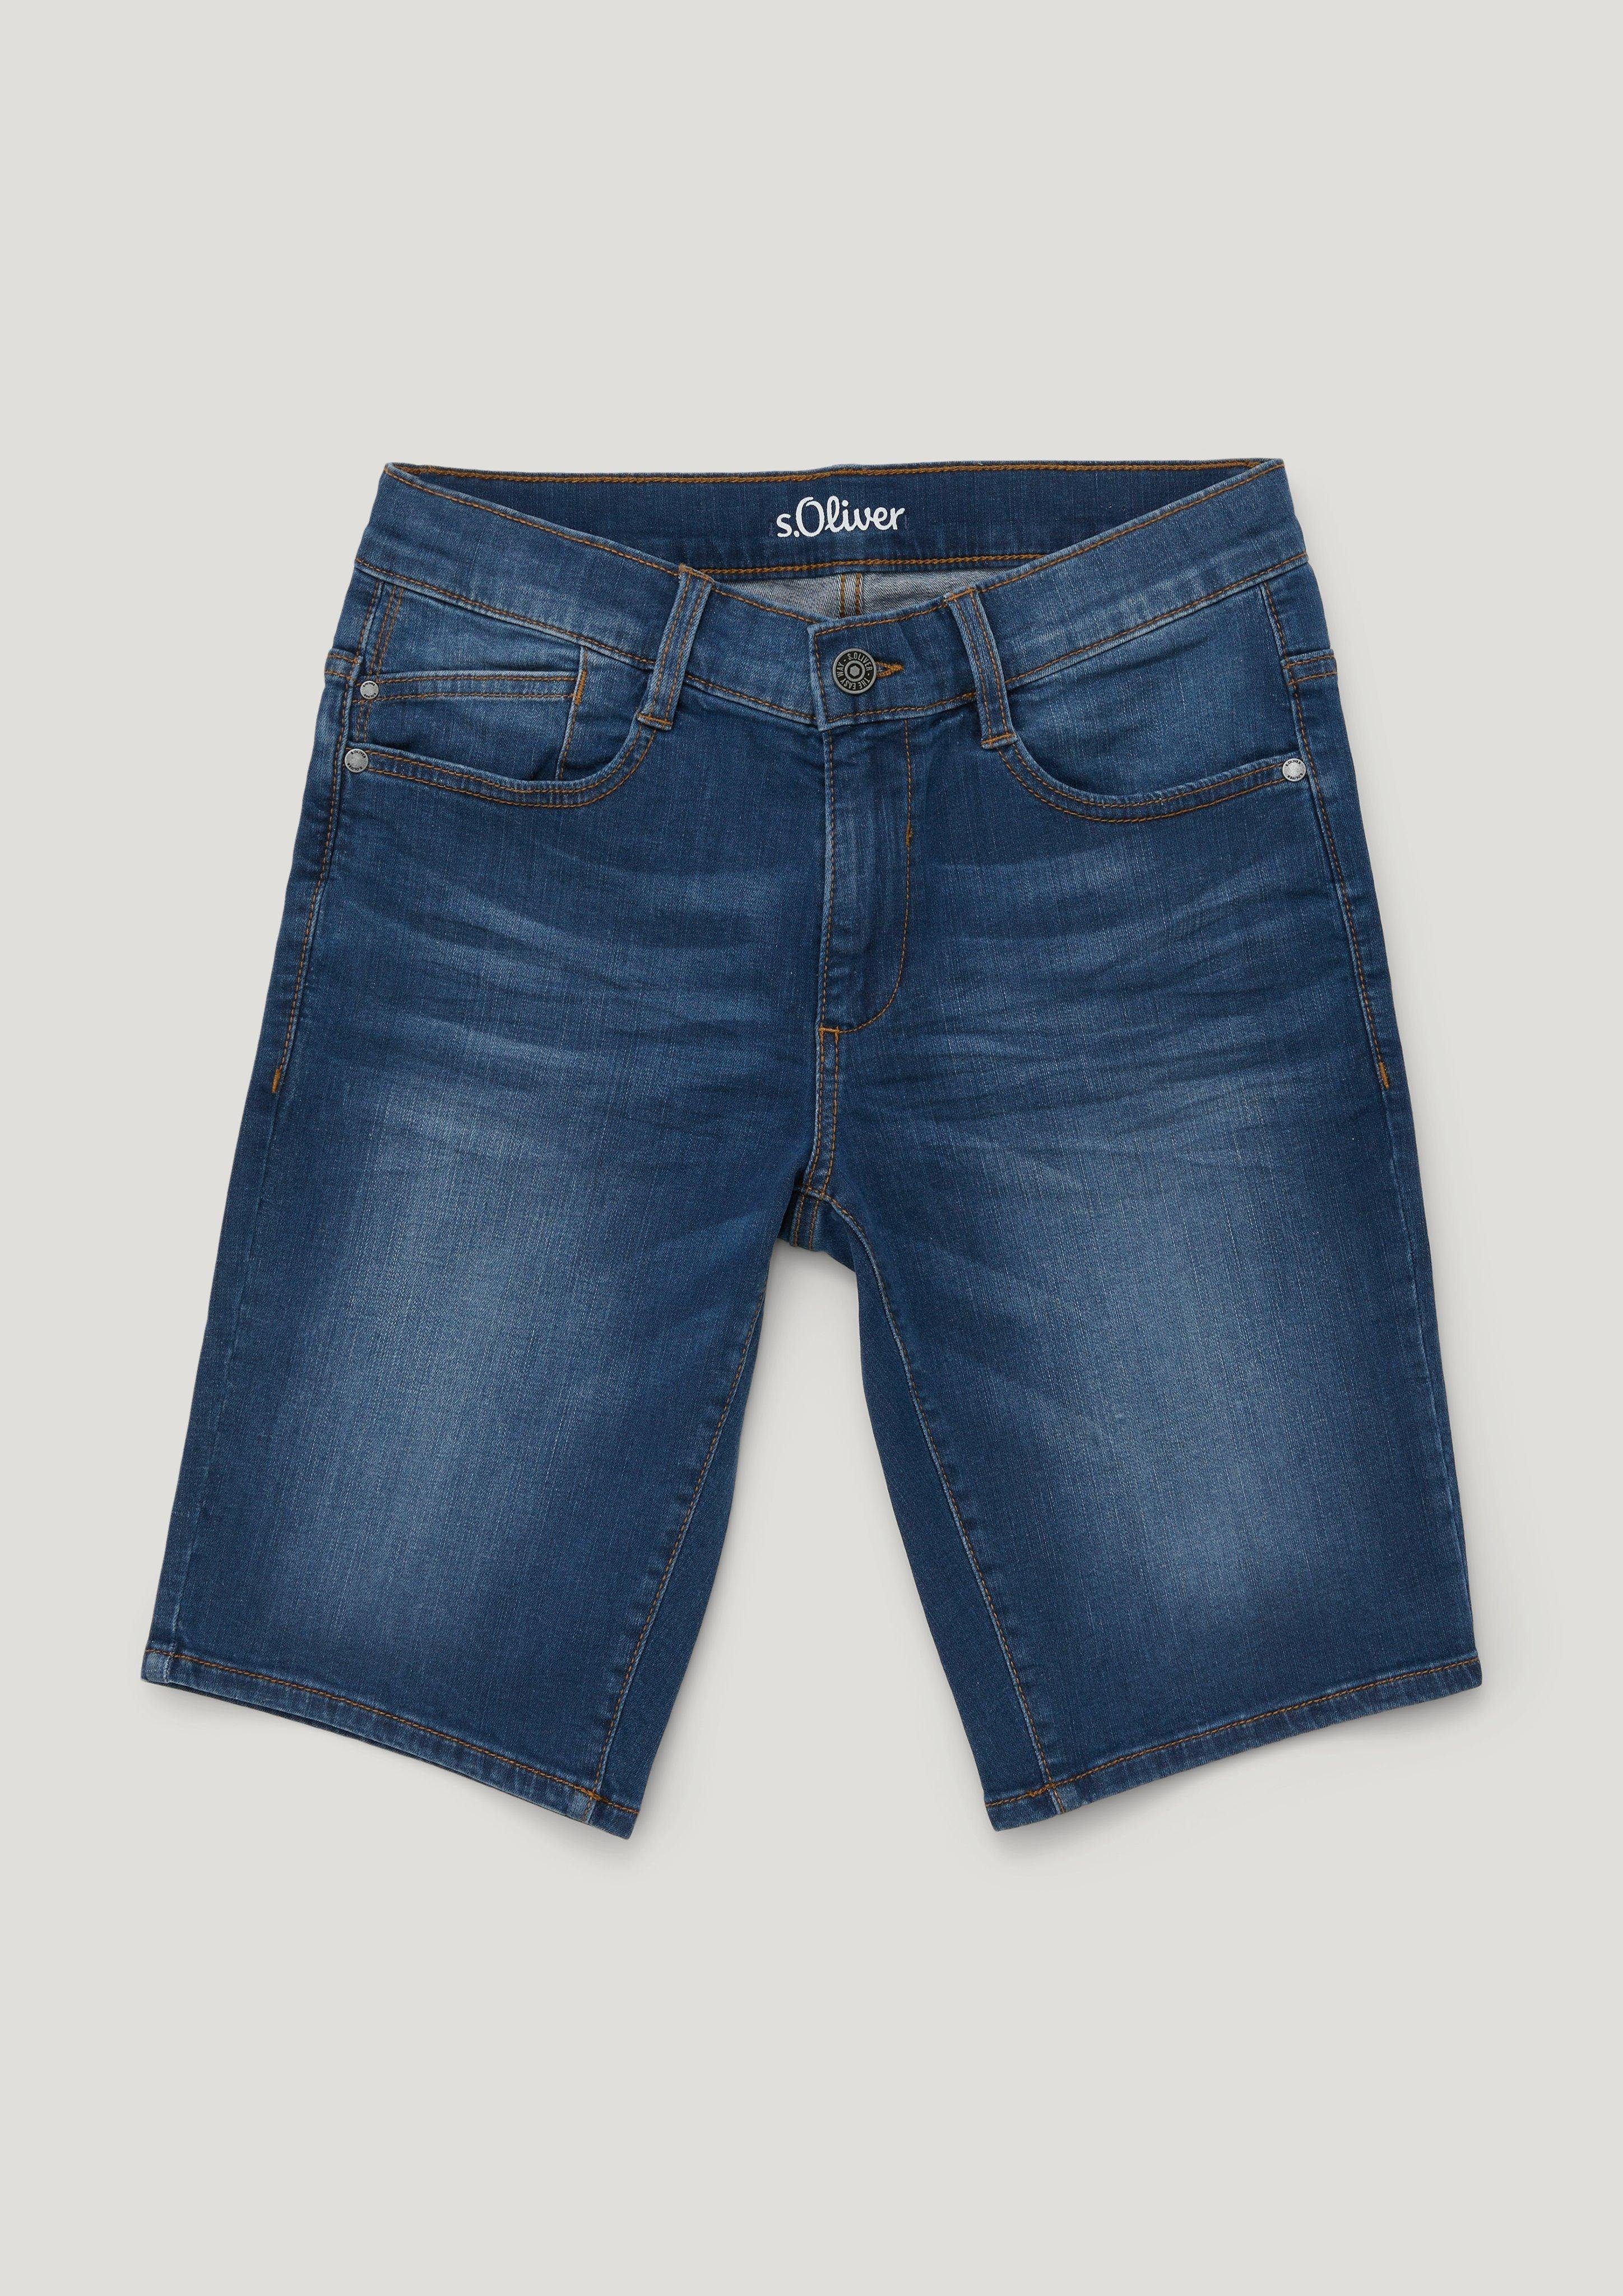 Jeans-Bermuda Kontrastnähte, / Slim Mid Waschung Fit / Jeansshorts / Seattle Leg Rise Regular s.Oliver